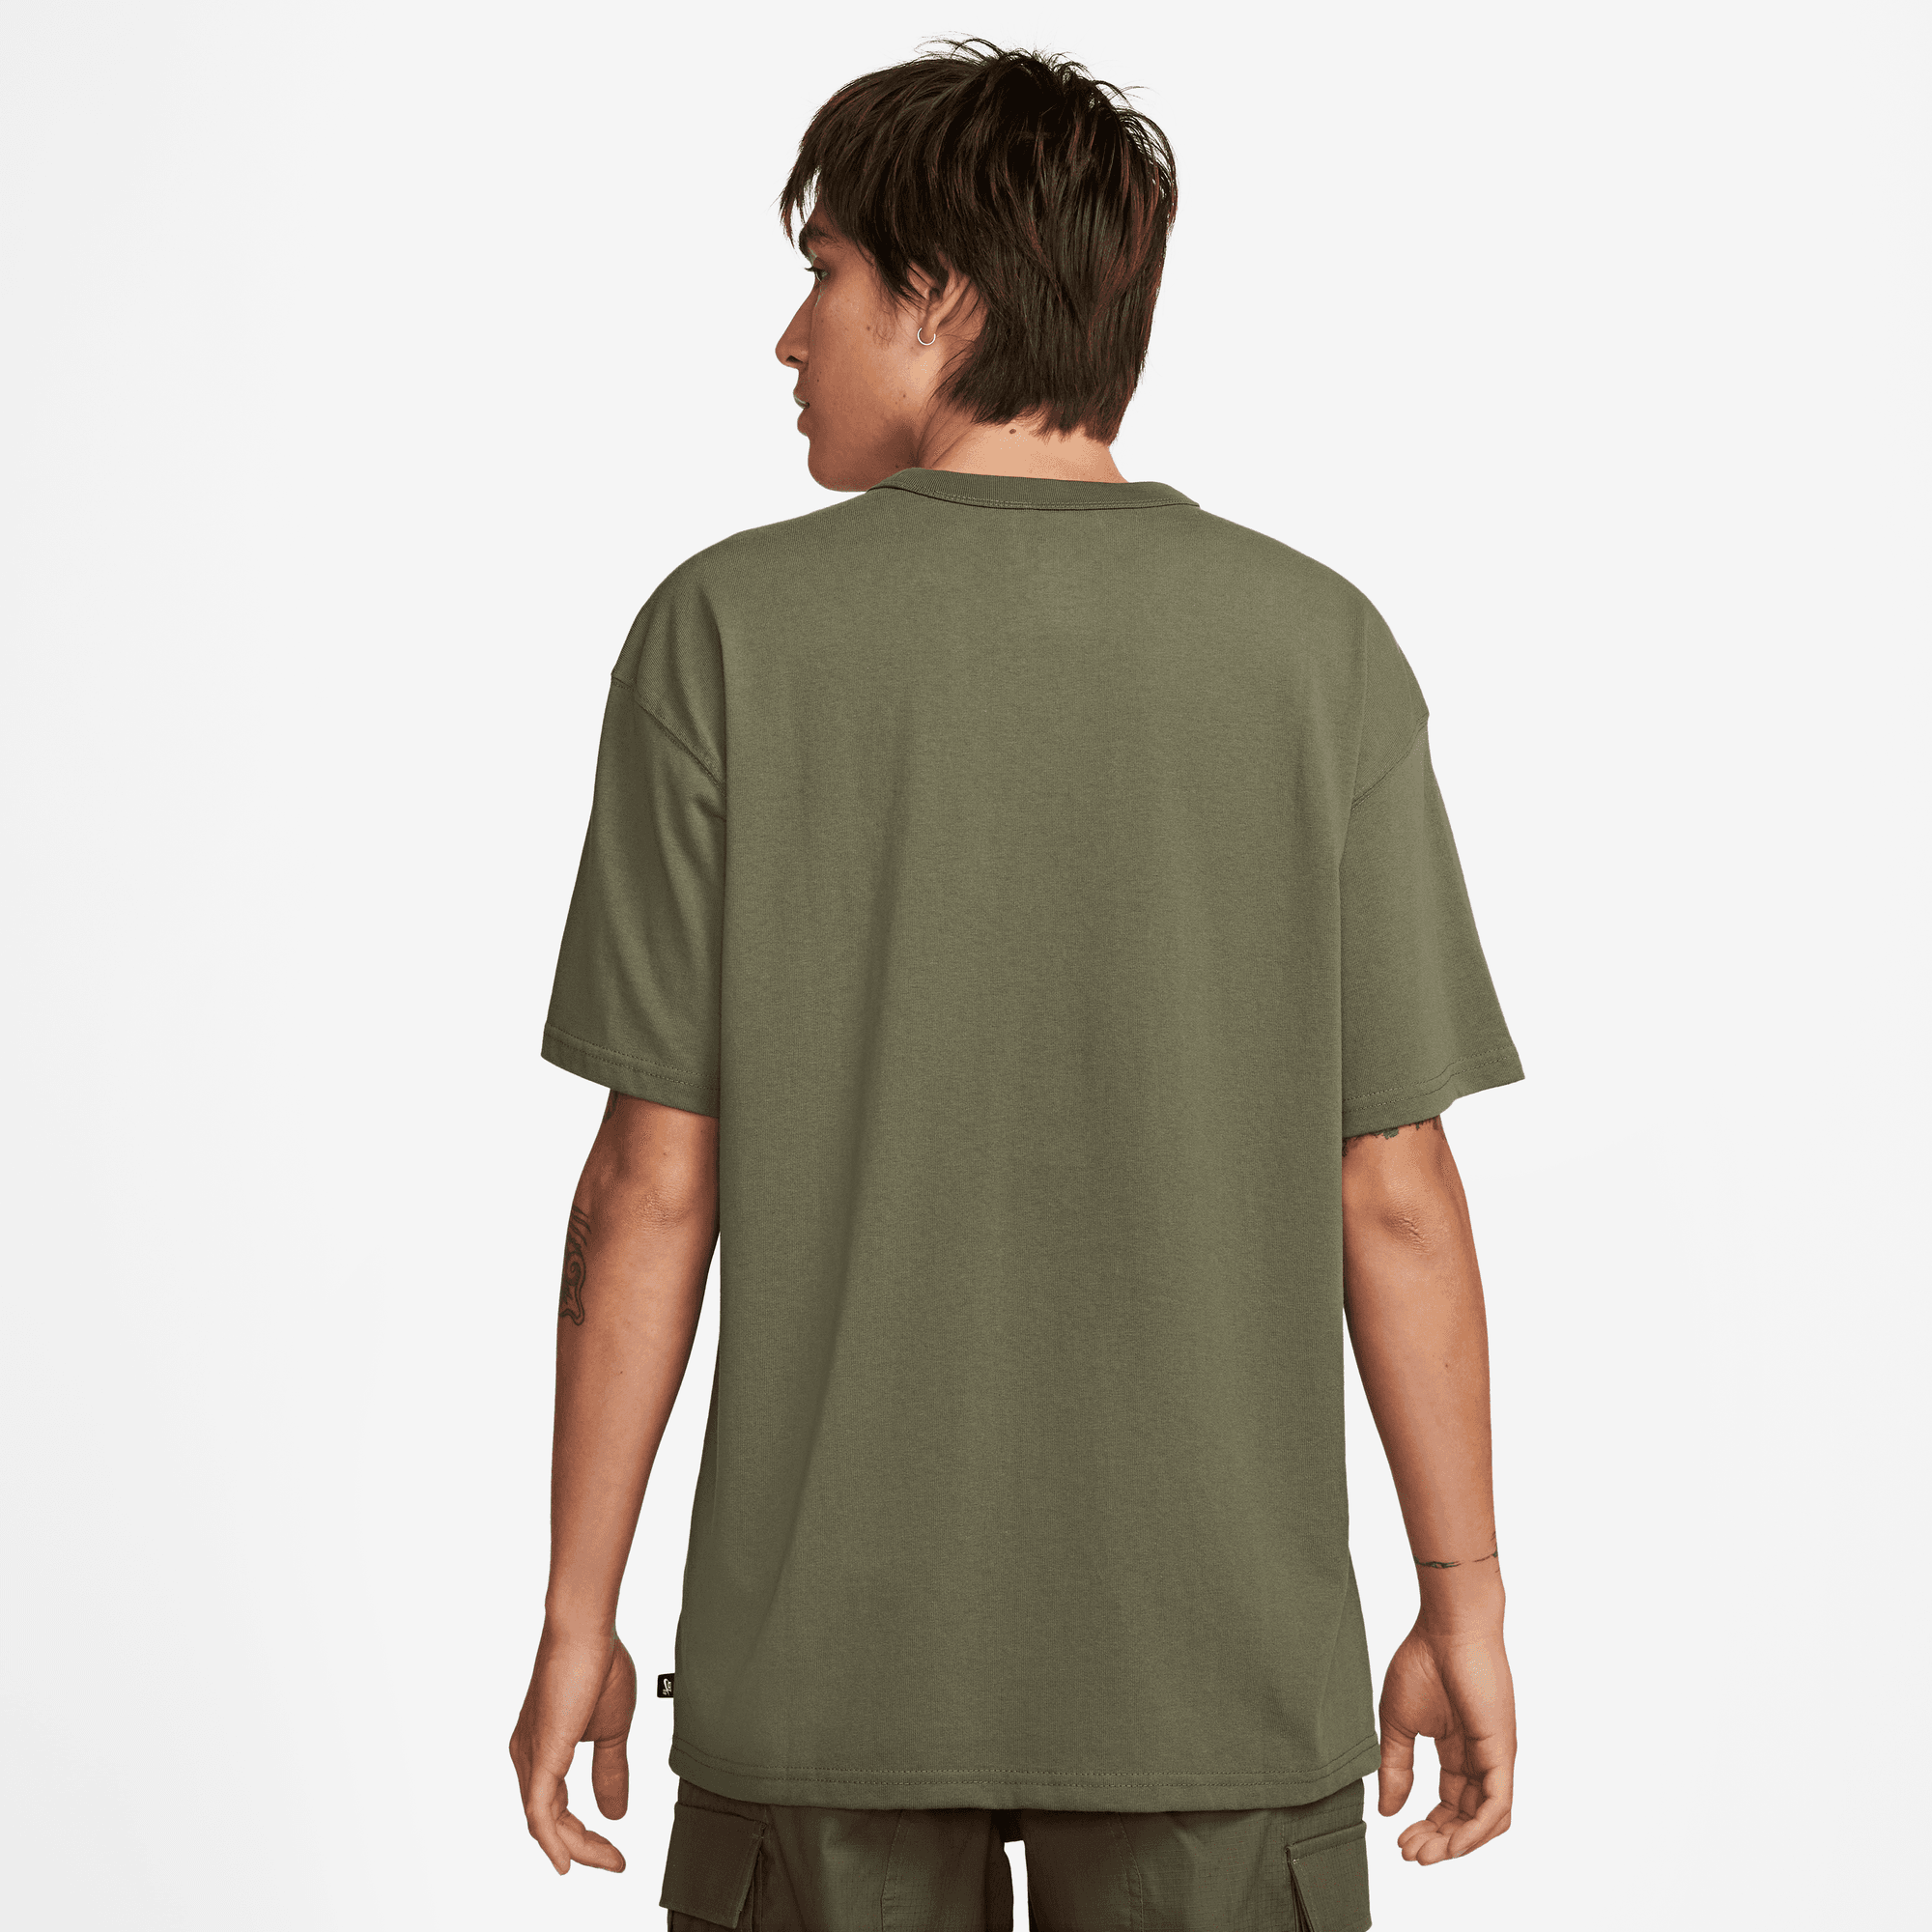 Medium Olive Embroireded Patch Nike Sb T-Shirt Back